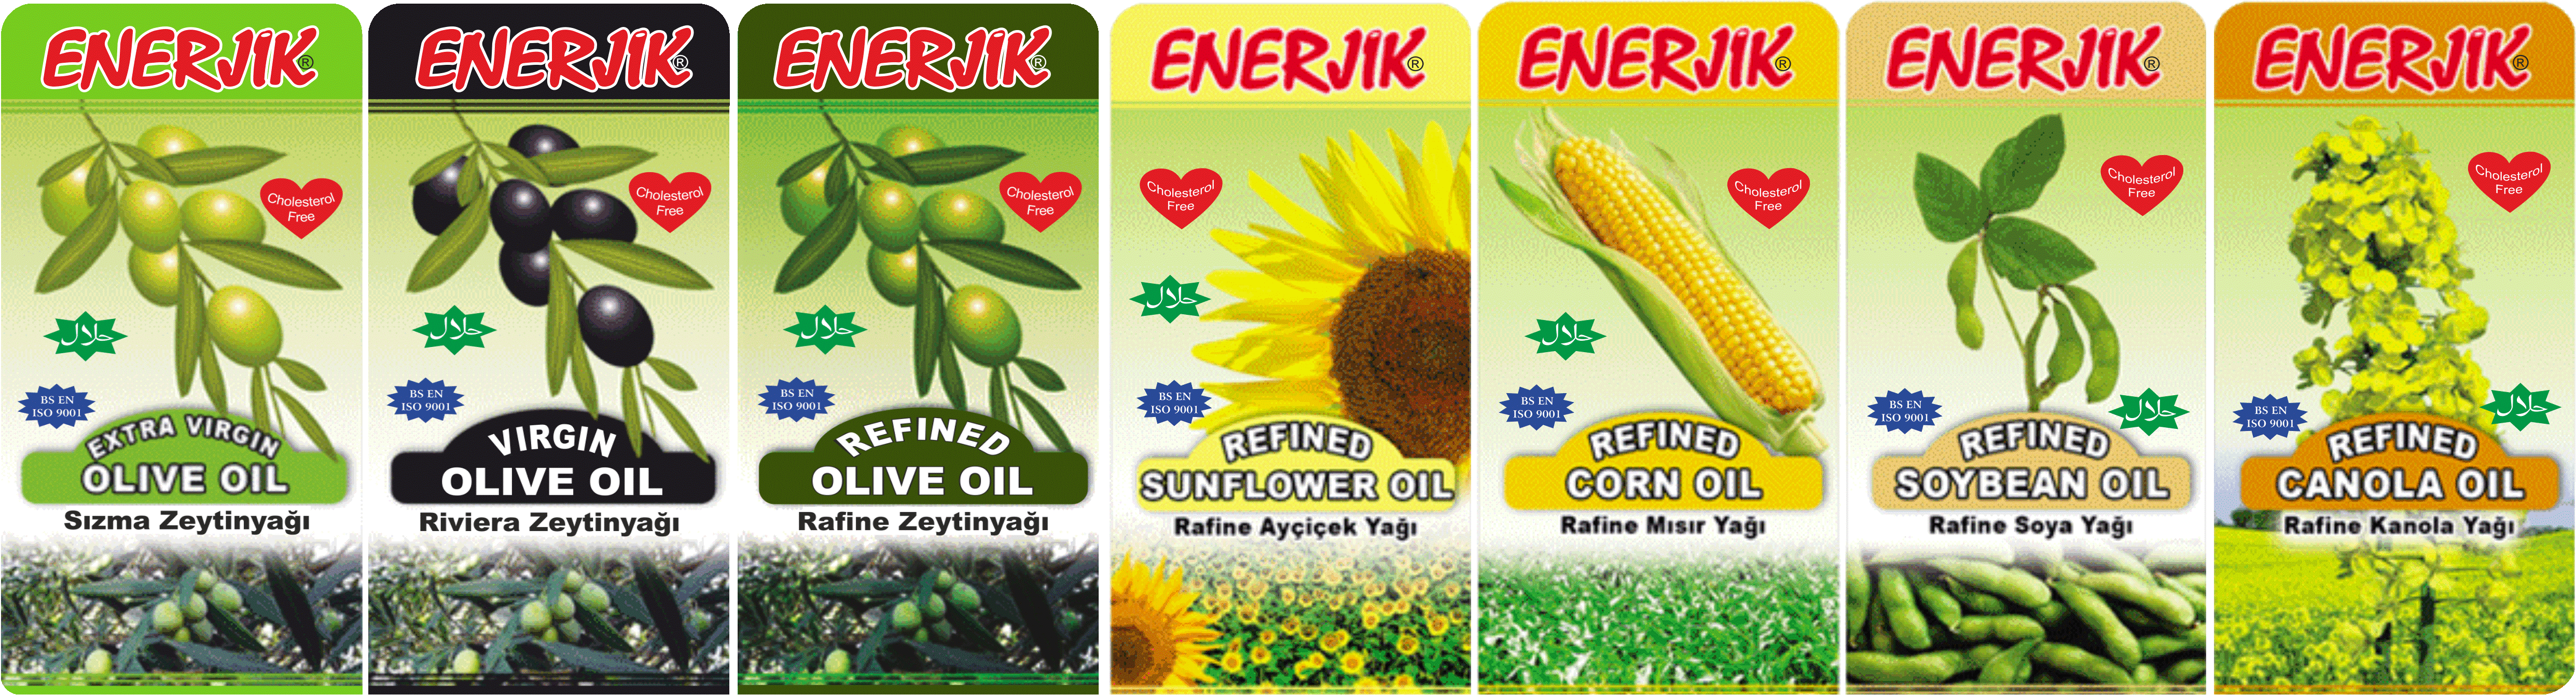 Enerjik Edible Oils